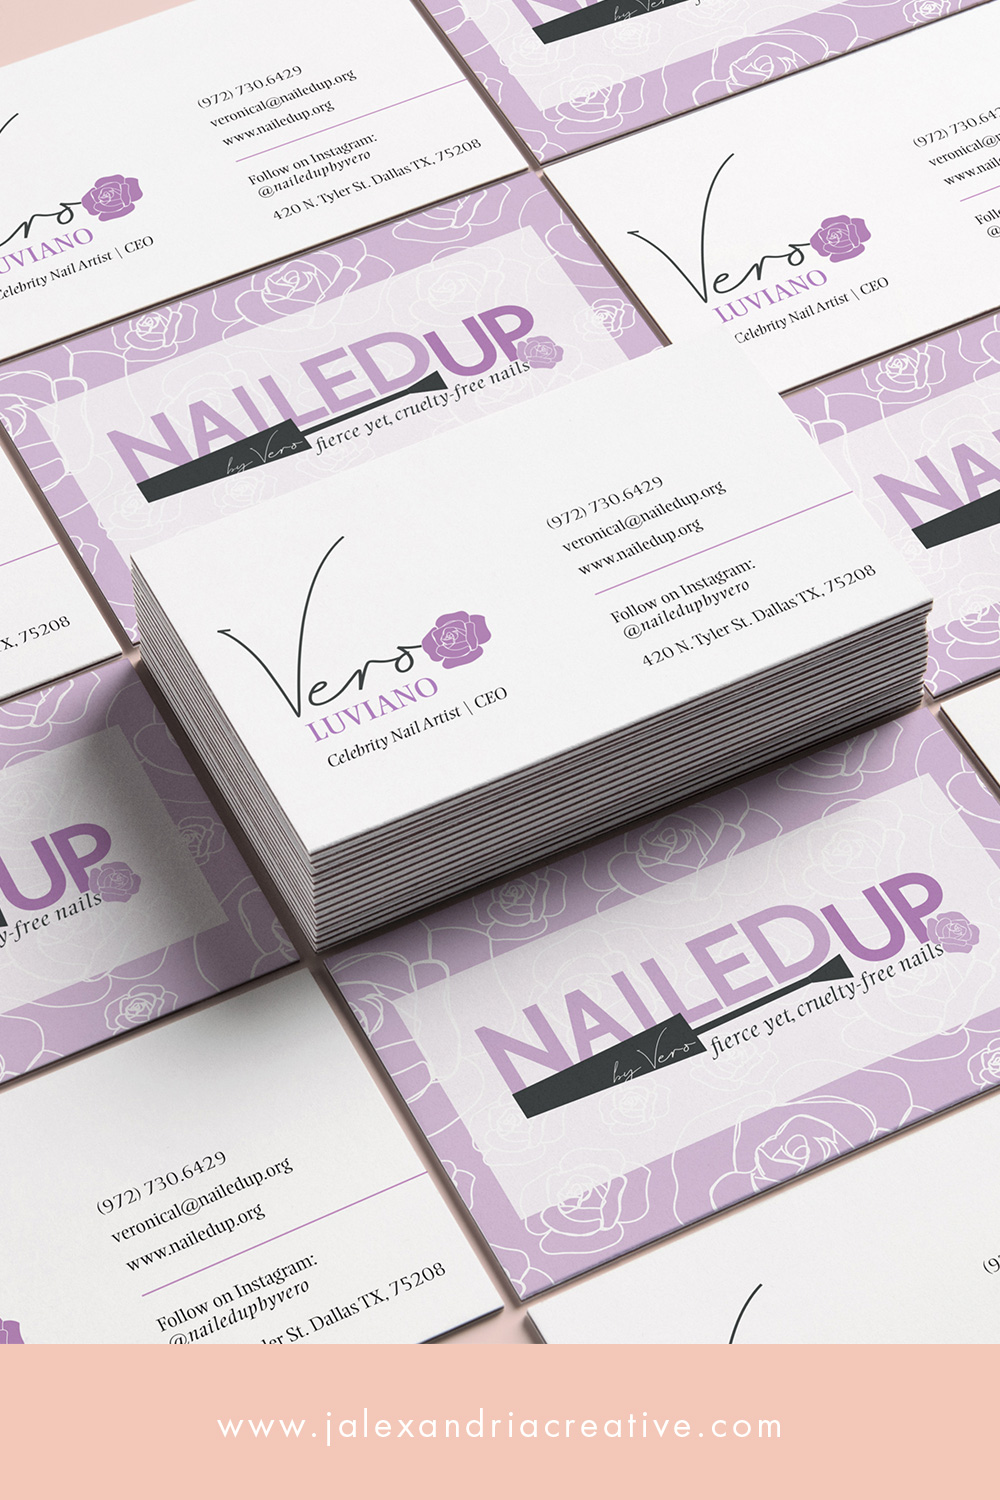 Nail Salon Business Card Design by J. Alexandria Creative | Branding